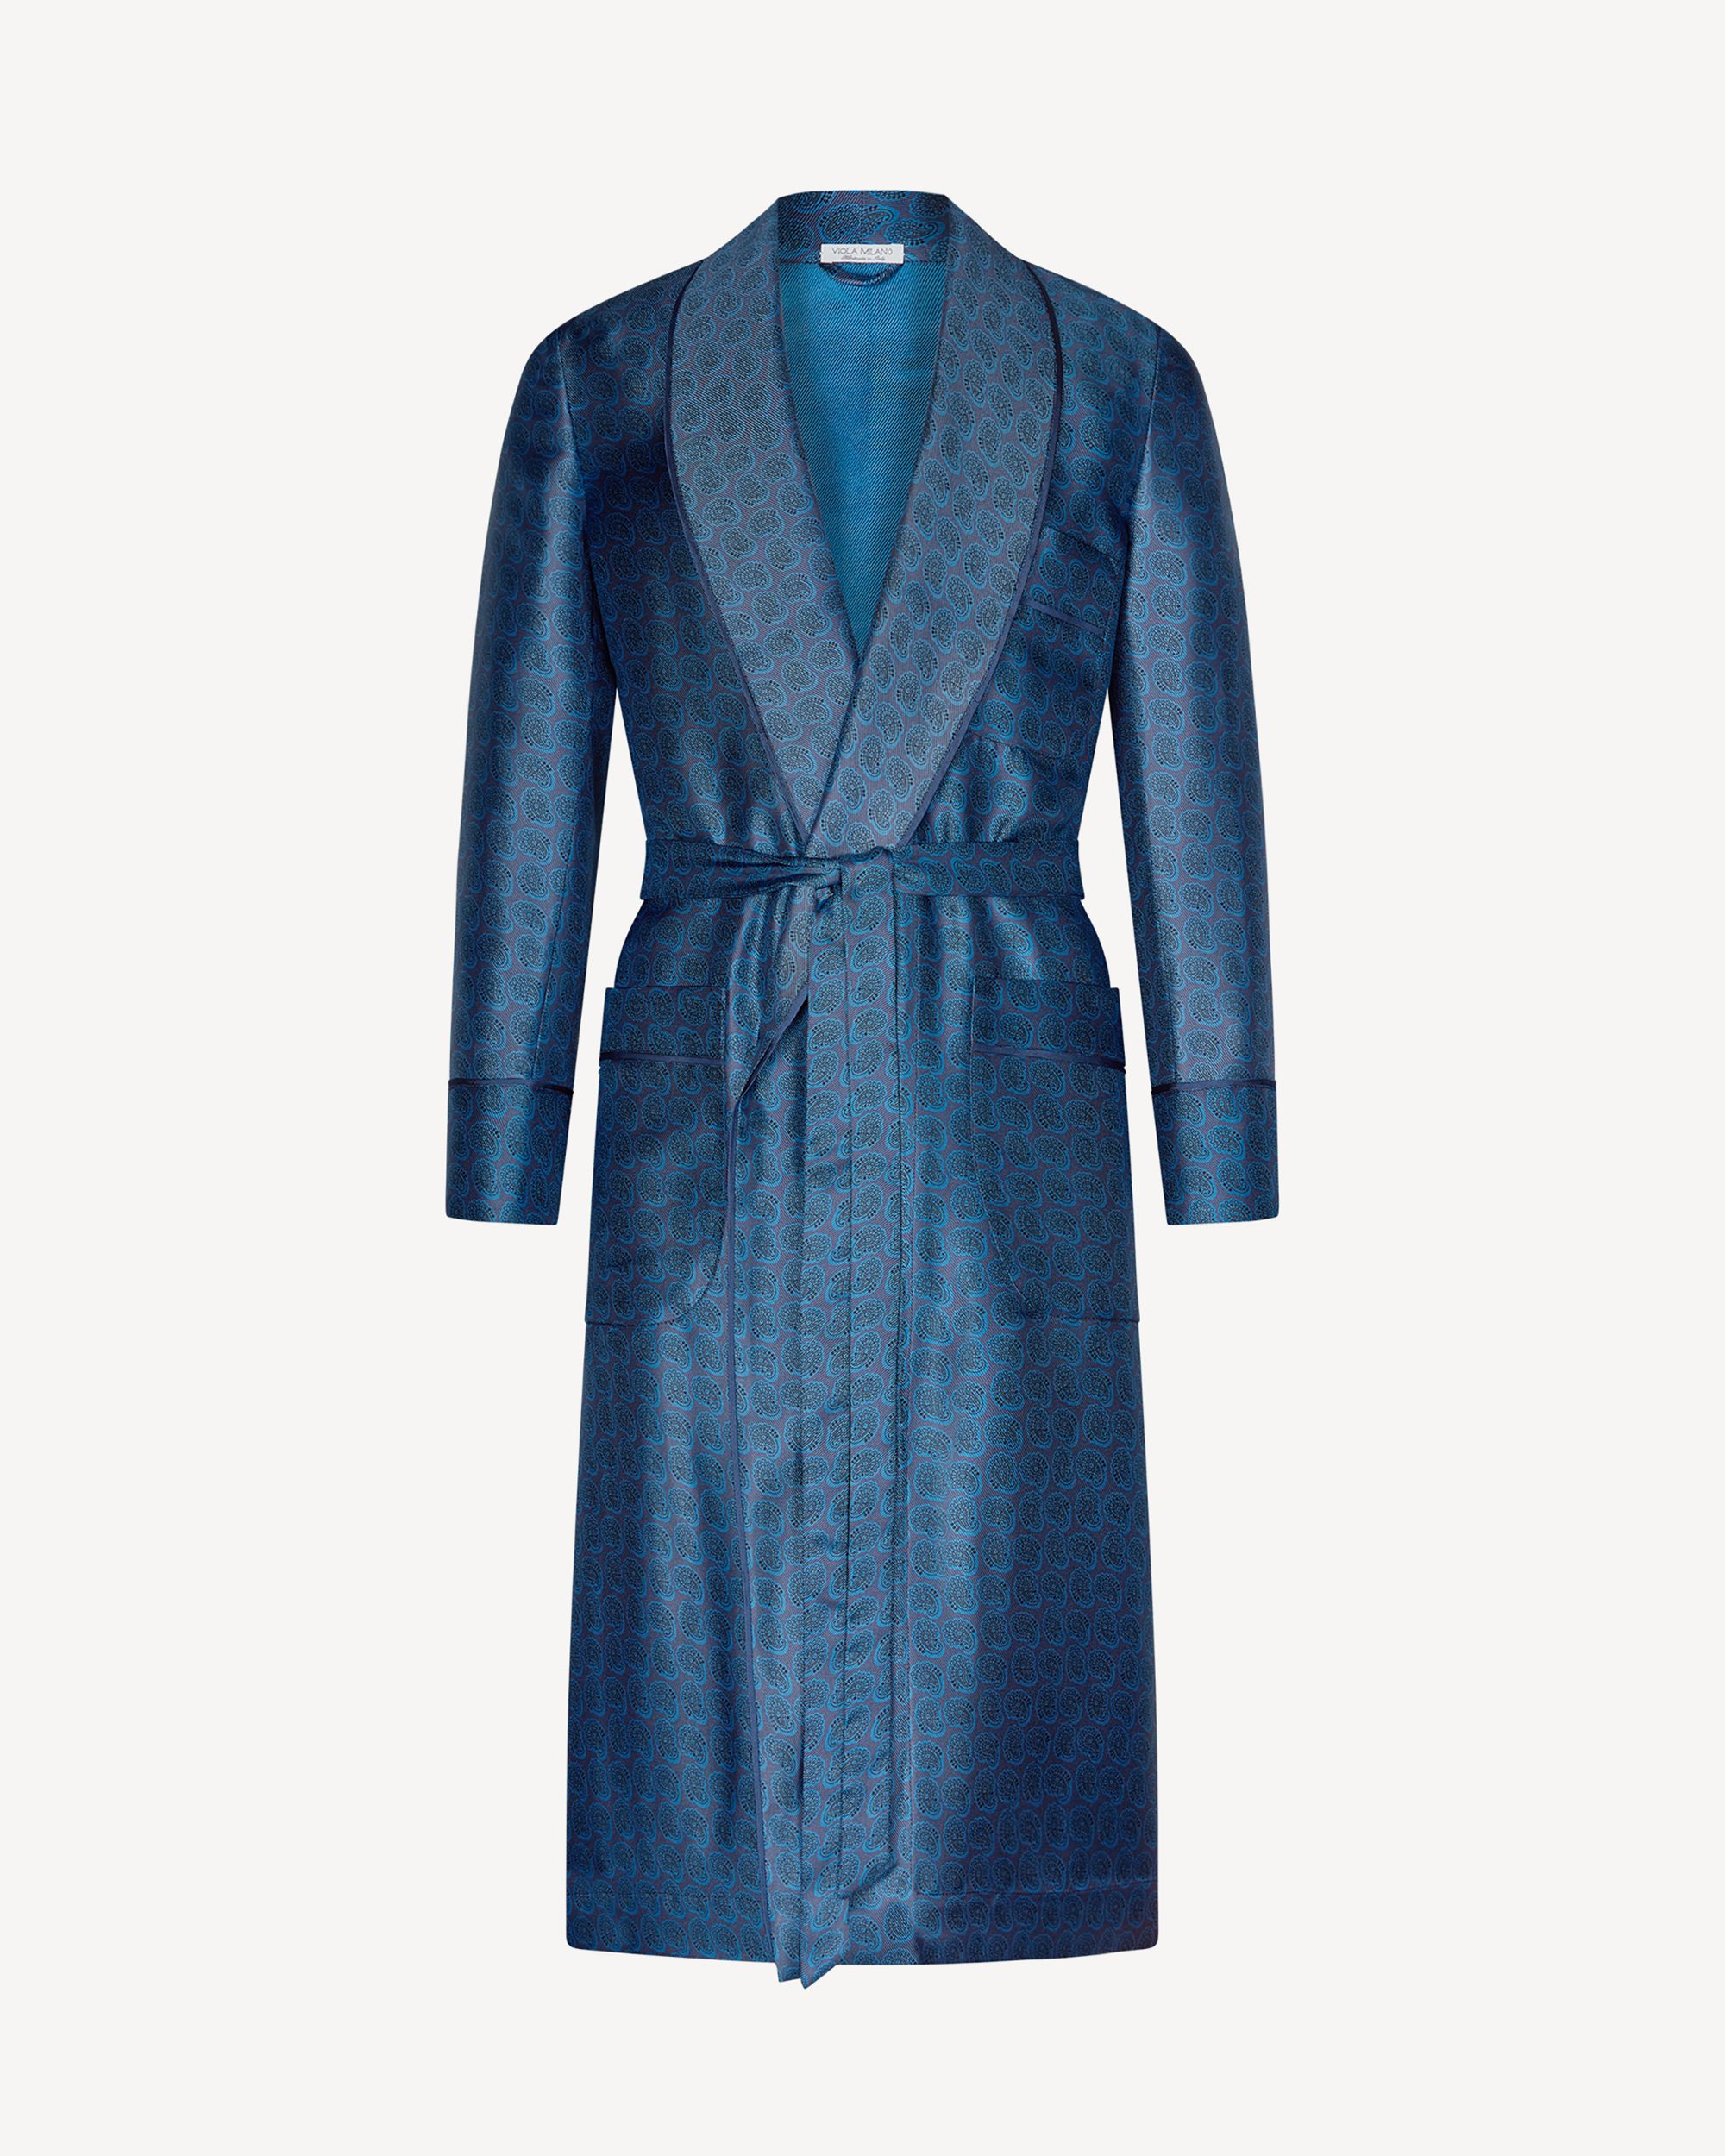 Fleece dressing gown - Dark blue - Ladies | H&M IN